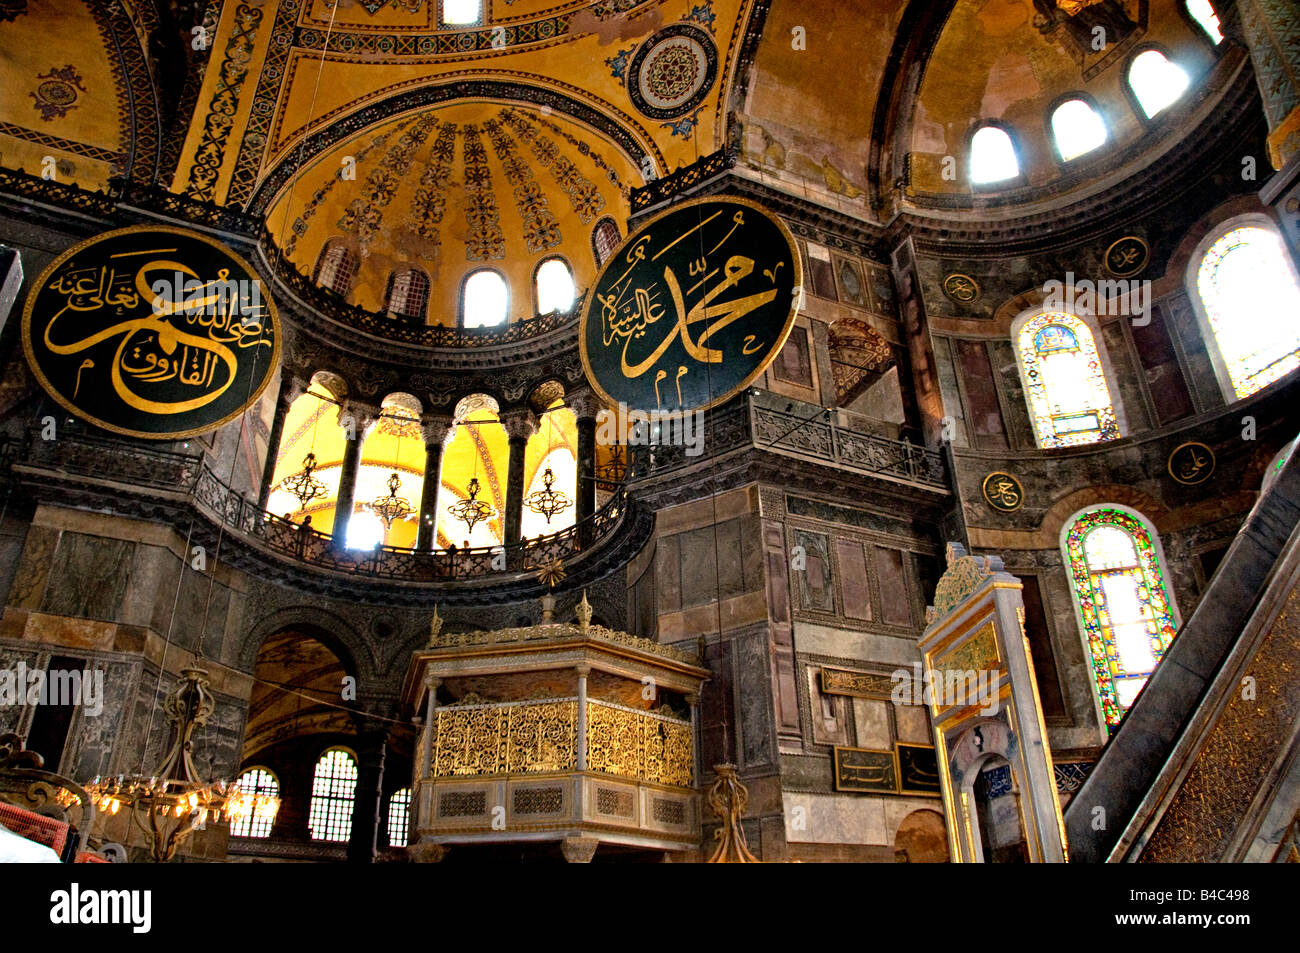 Aya sofya Haghia sophia mosque Istanbul Turkey koran inscriptions and decorative marble Stock Photo